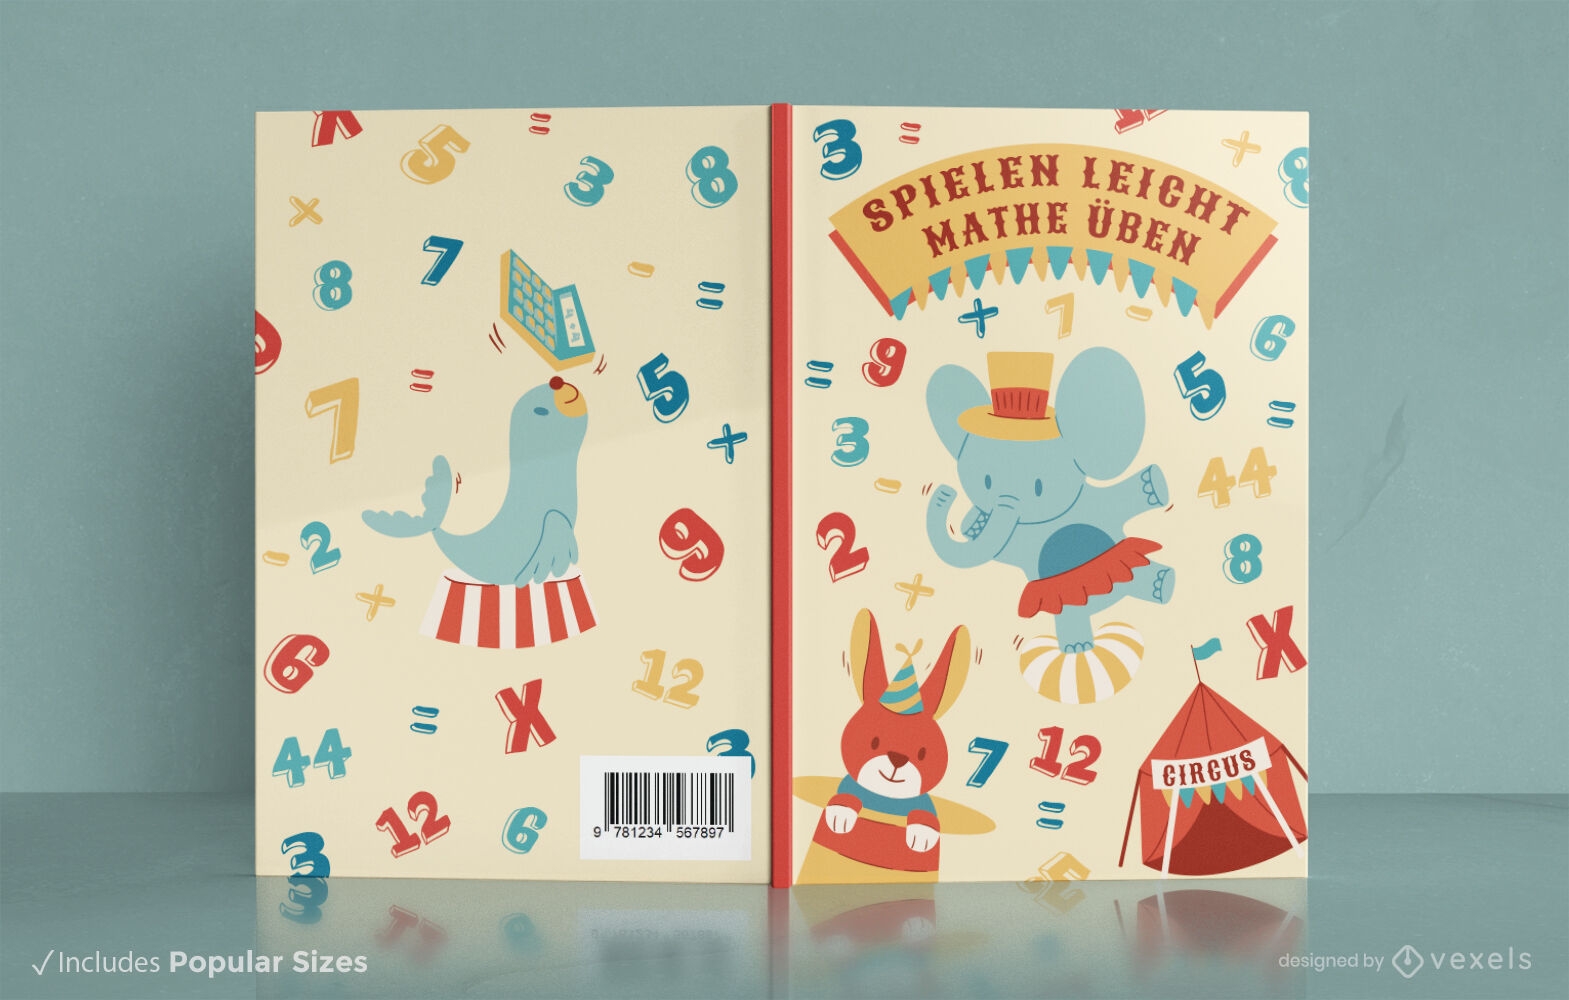 Colorful math circus activity book cover design